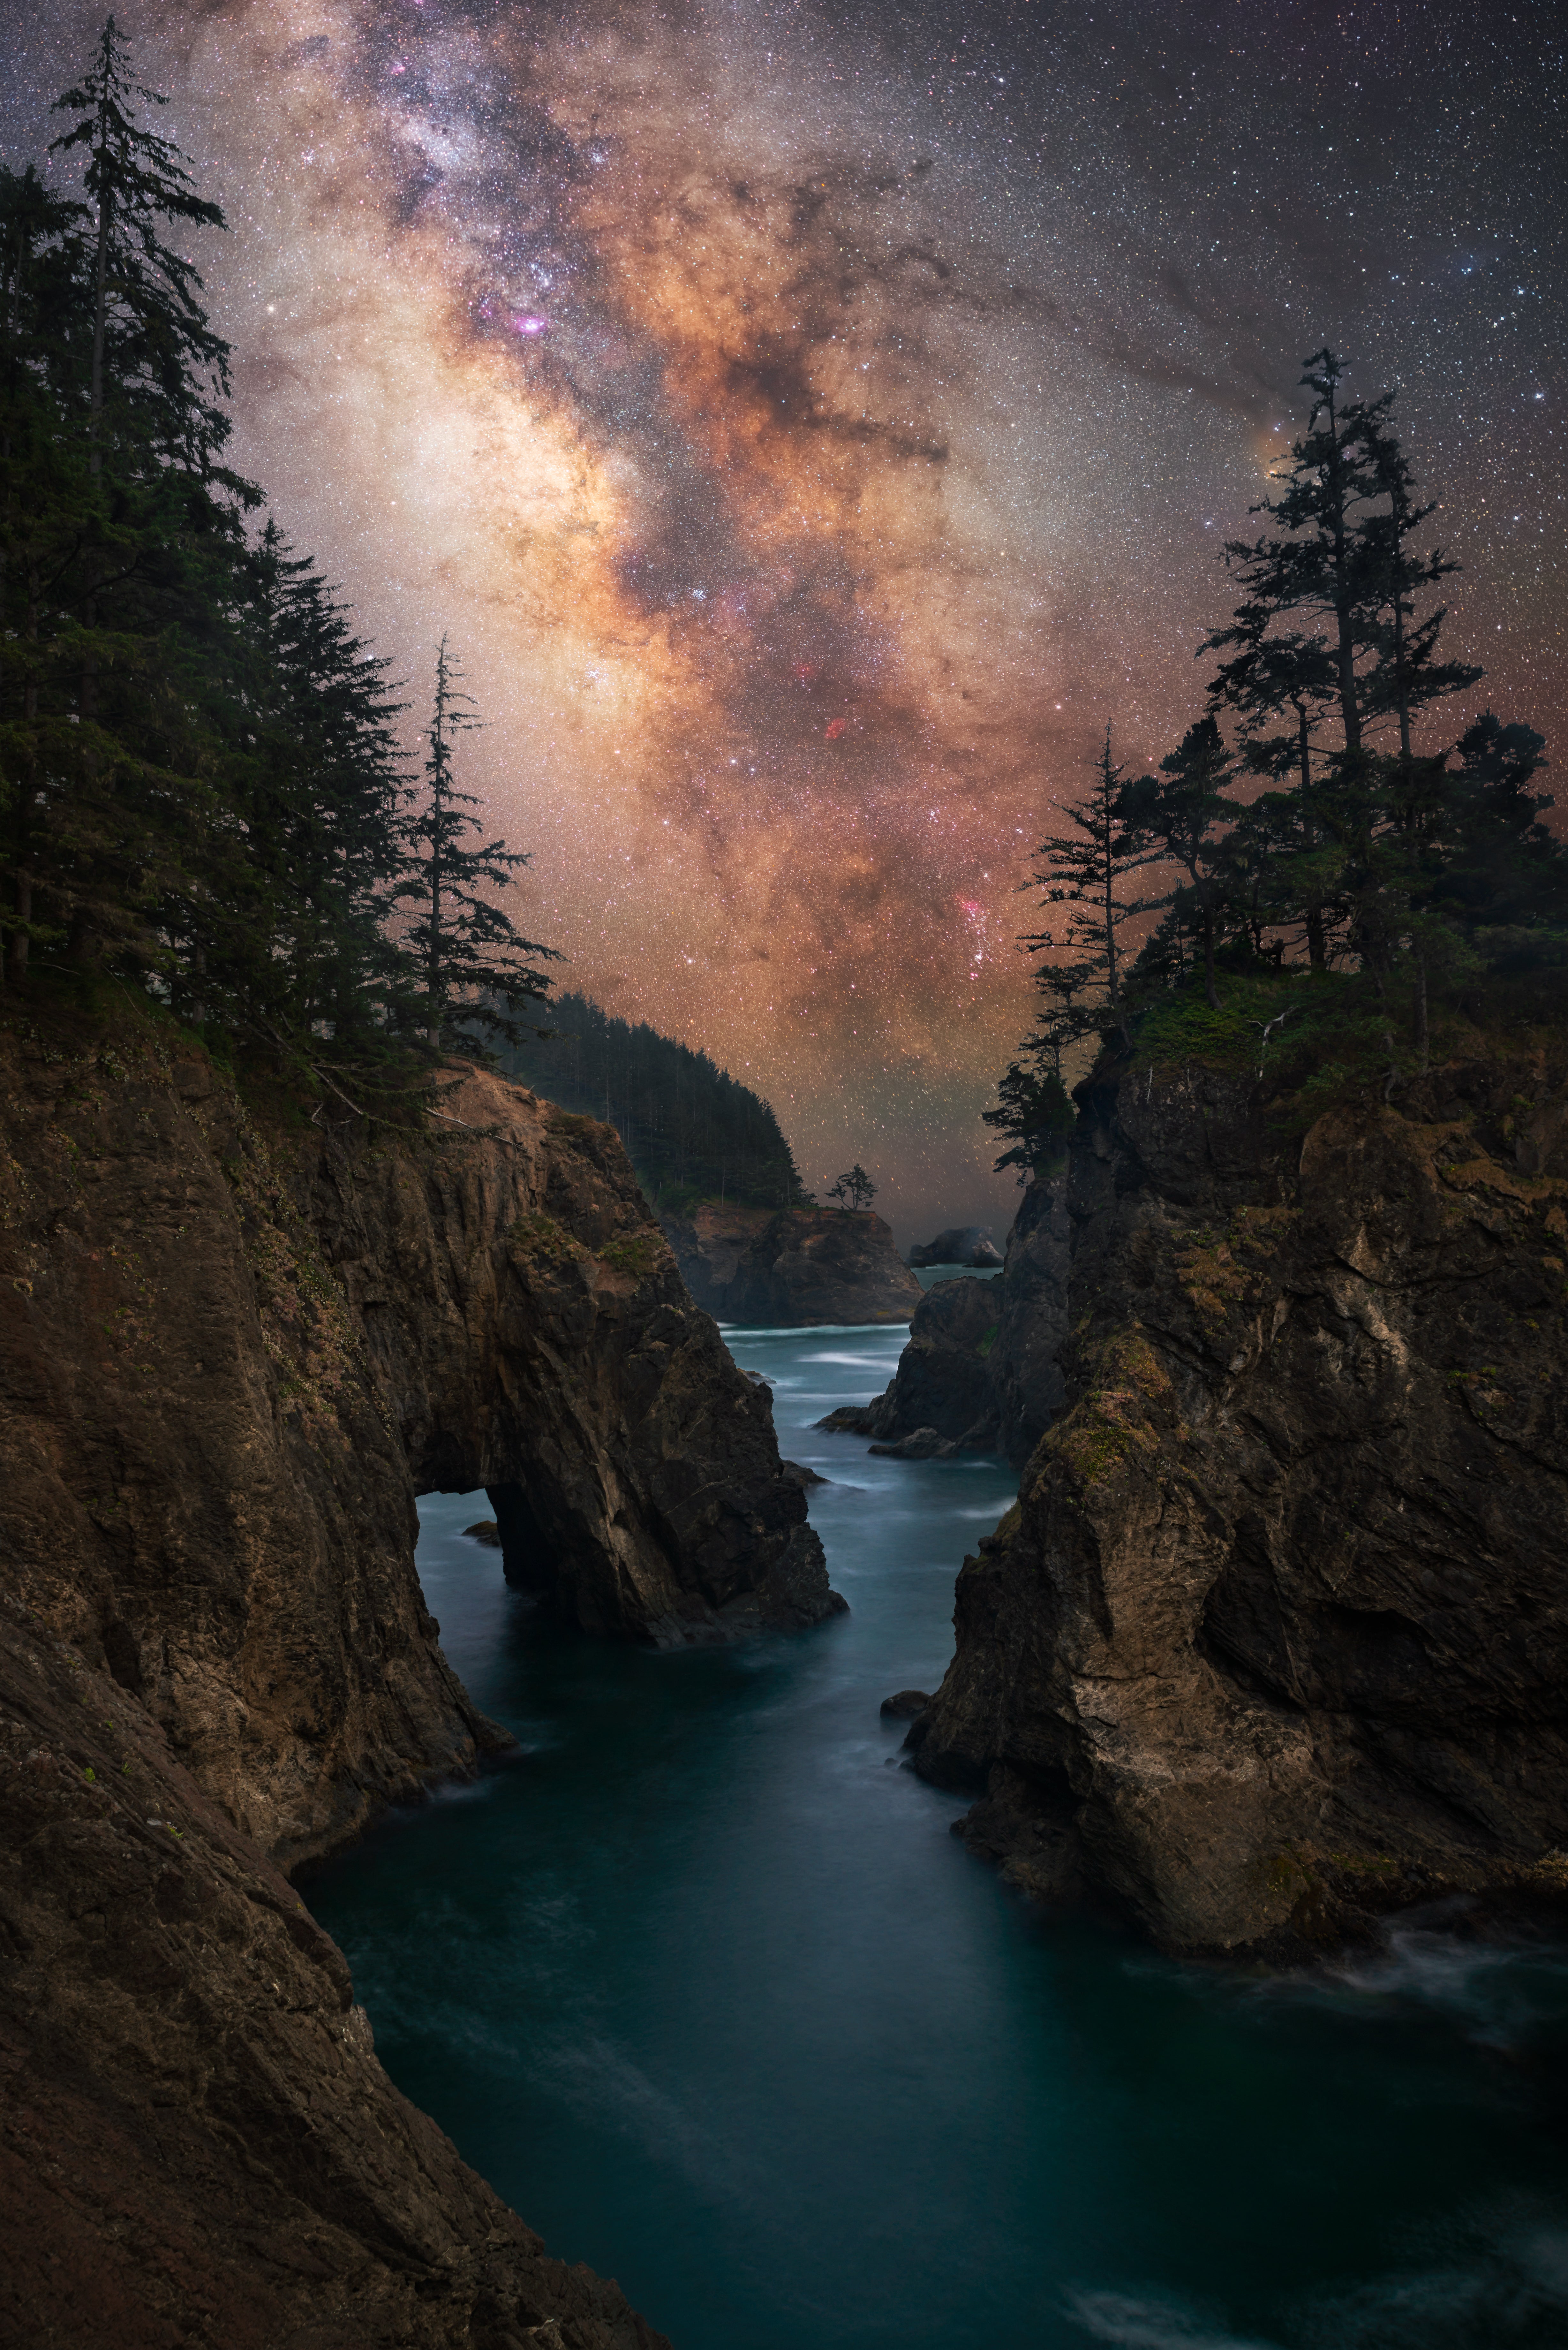 The Milky Way above the Oregon coast. (Photo: © Marcin Zajac)